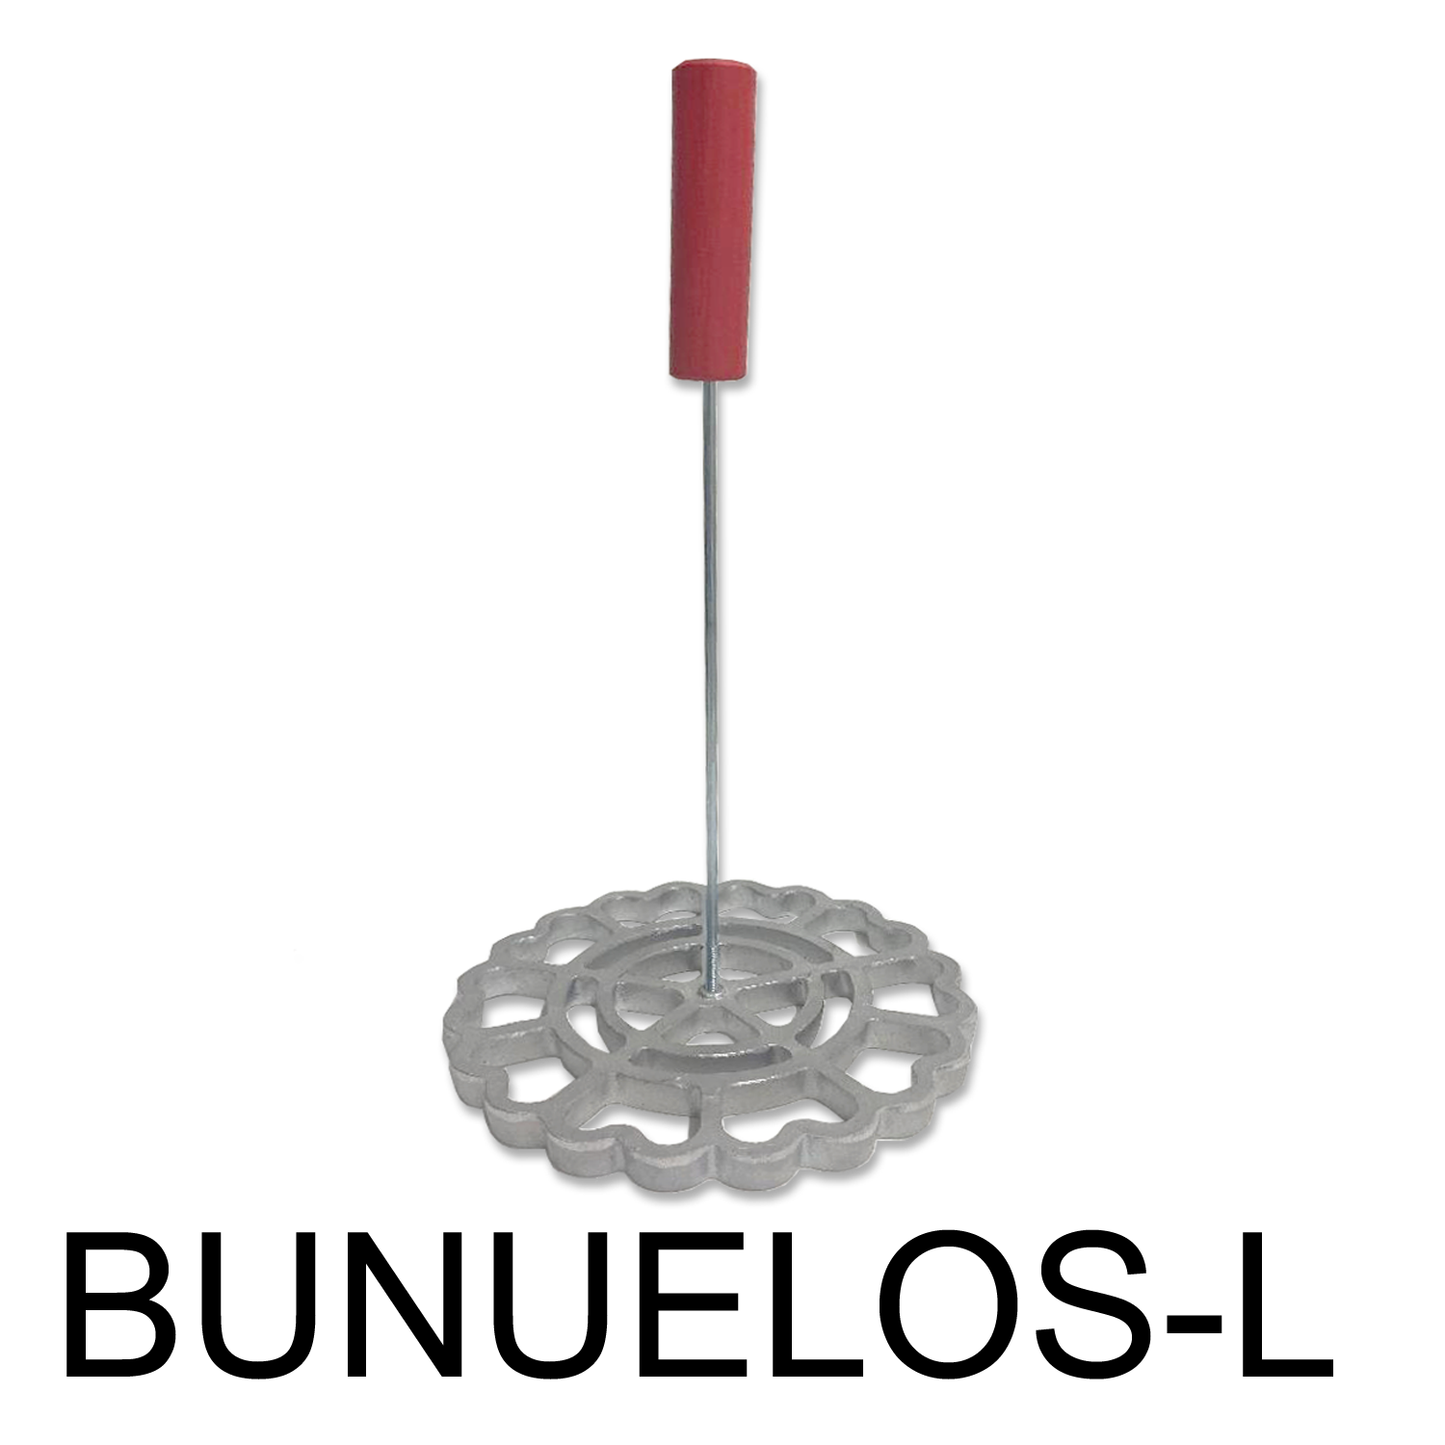 Large Buñuelos/Funnel Cake Cookie Maker Tool